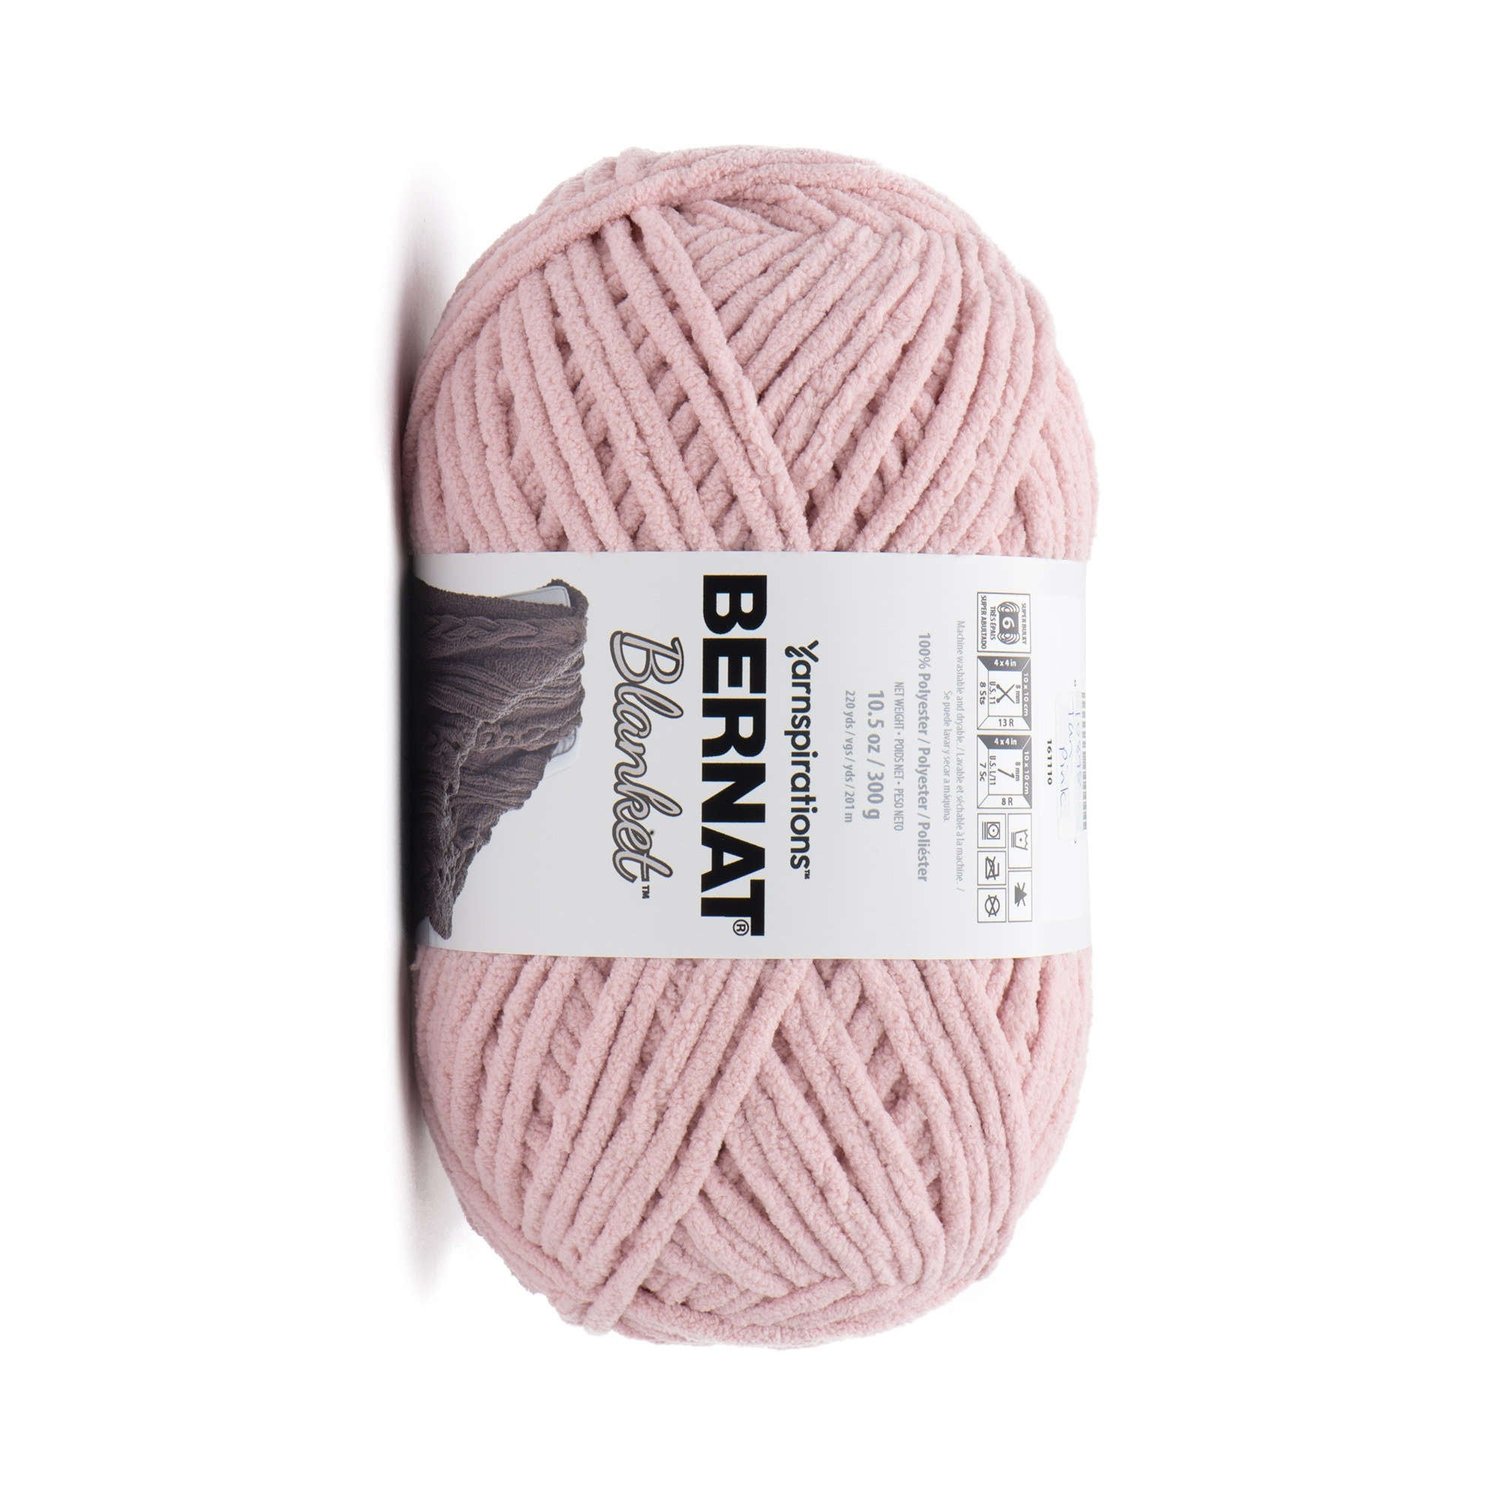 BERNAT Blanket 'Big', Pink Dust, 300g